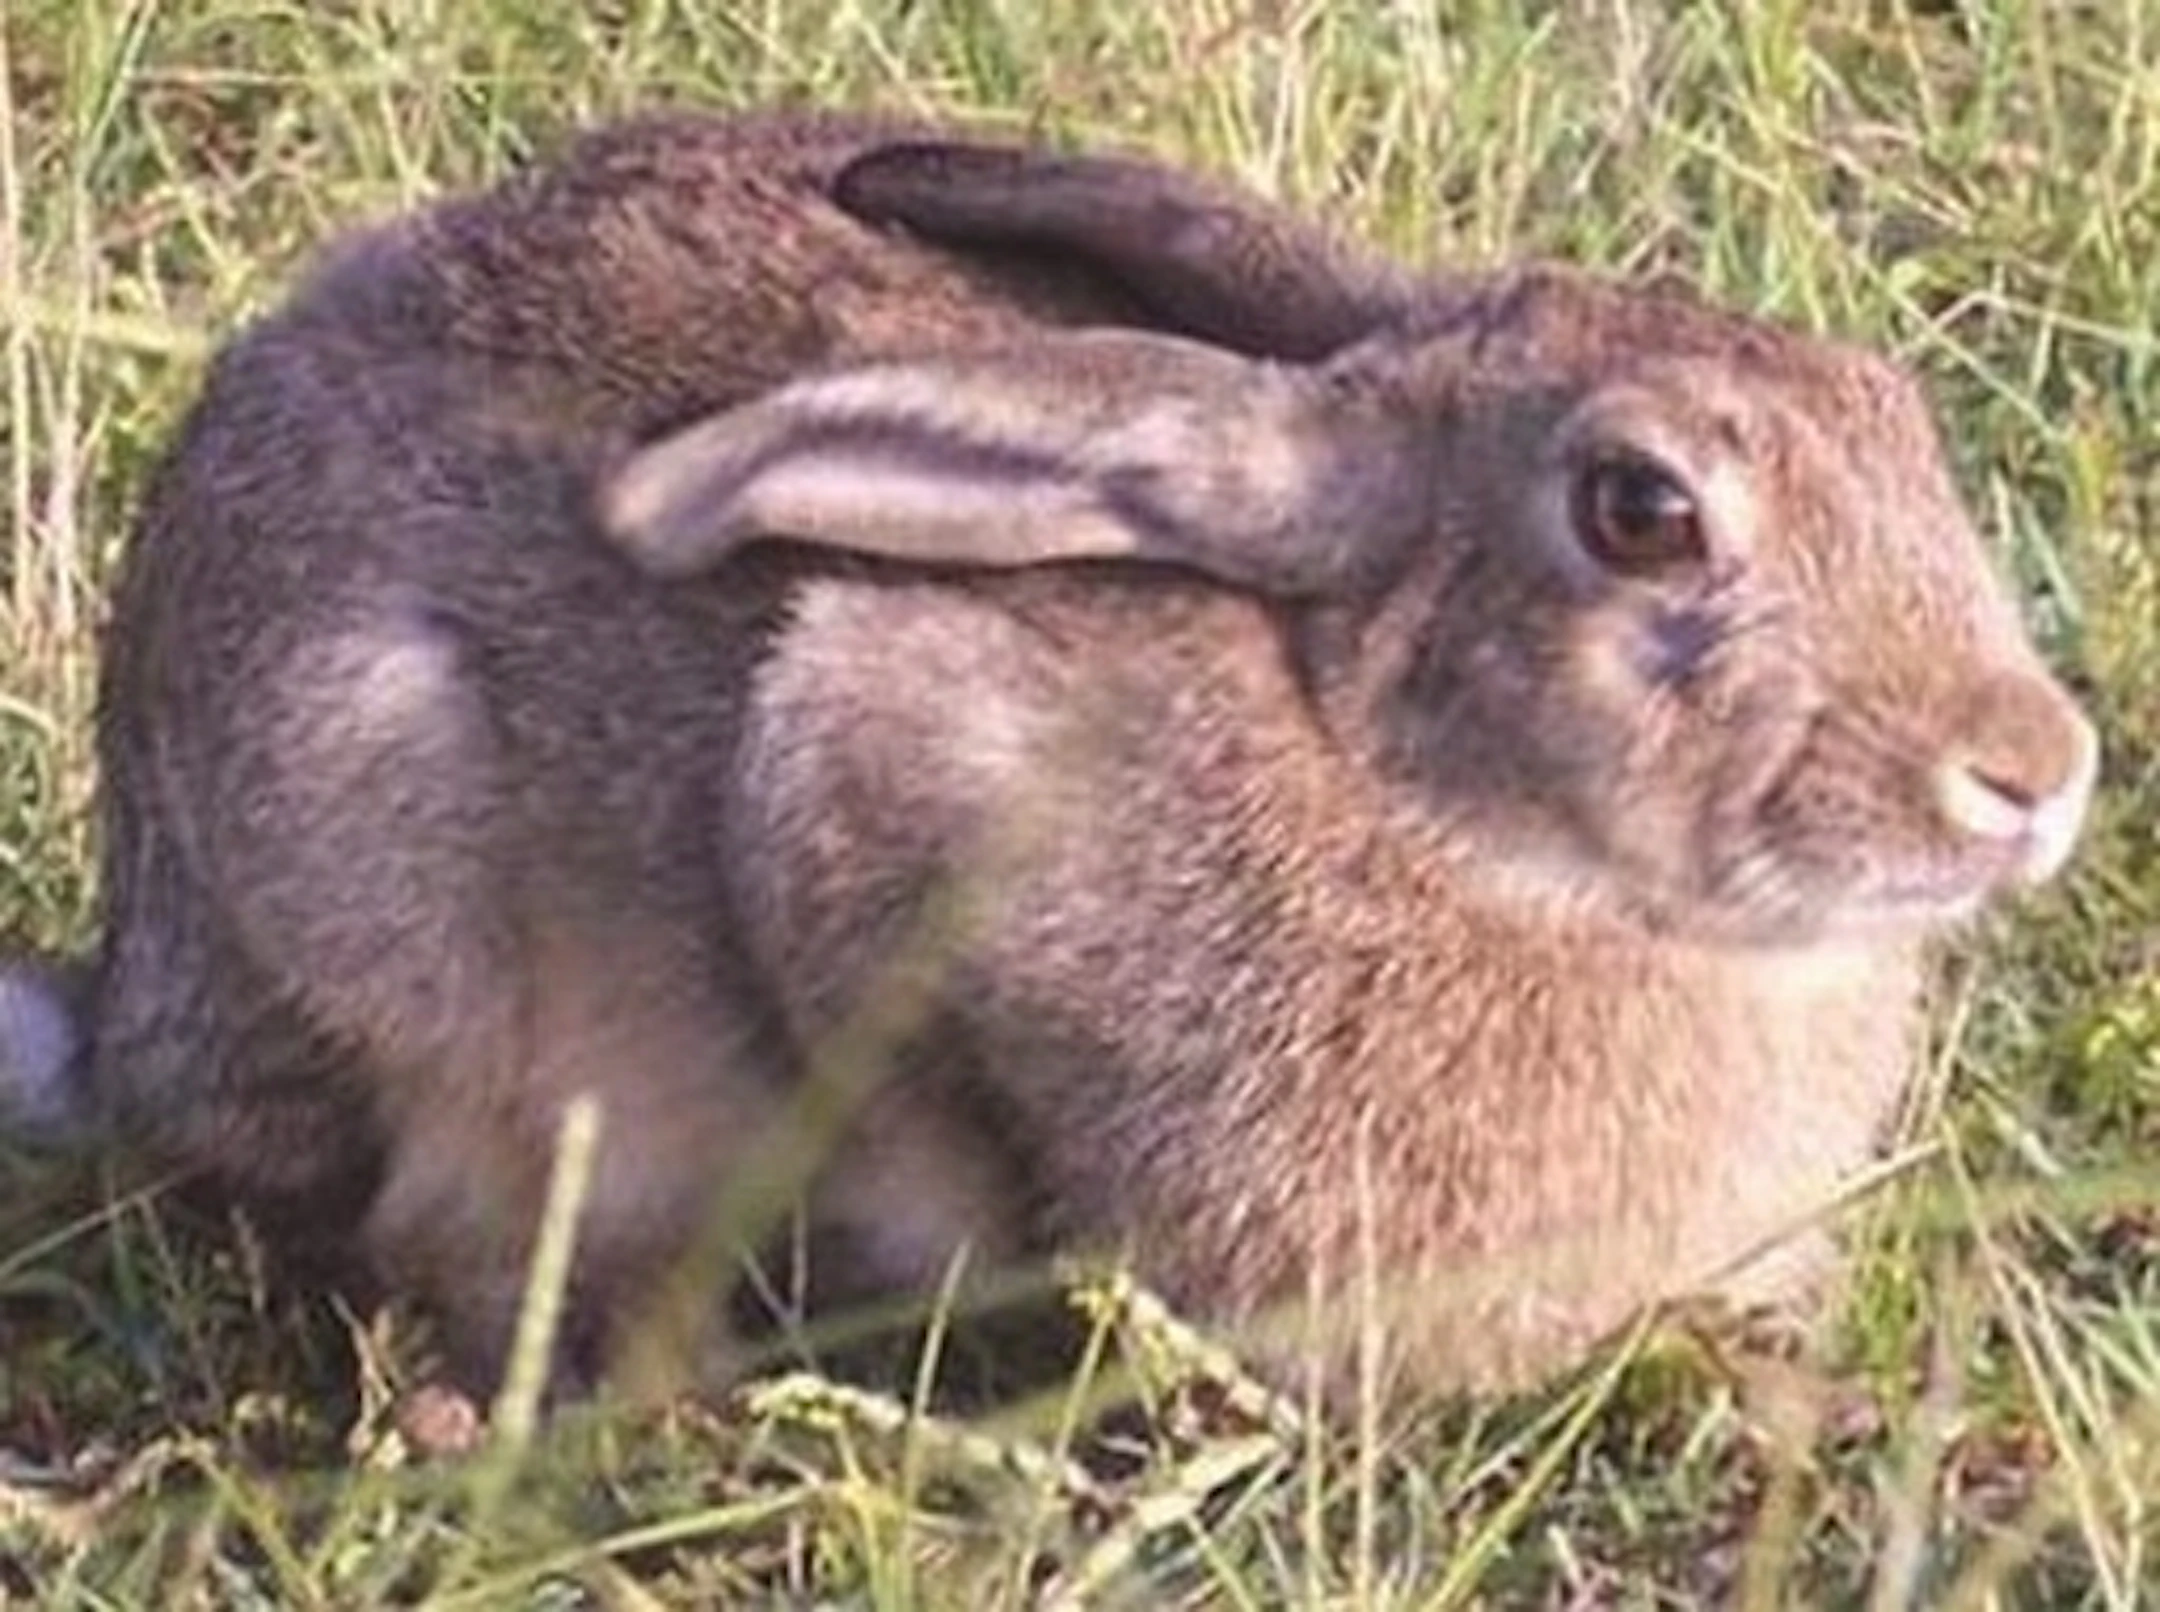 Rabbit ears back